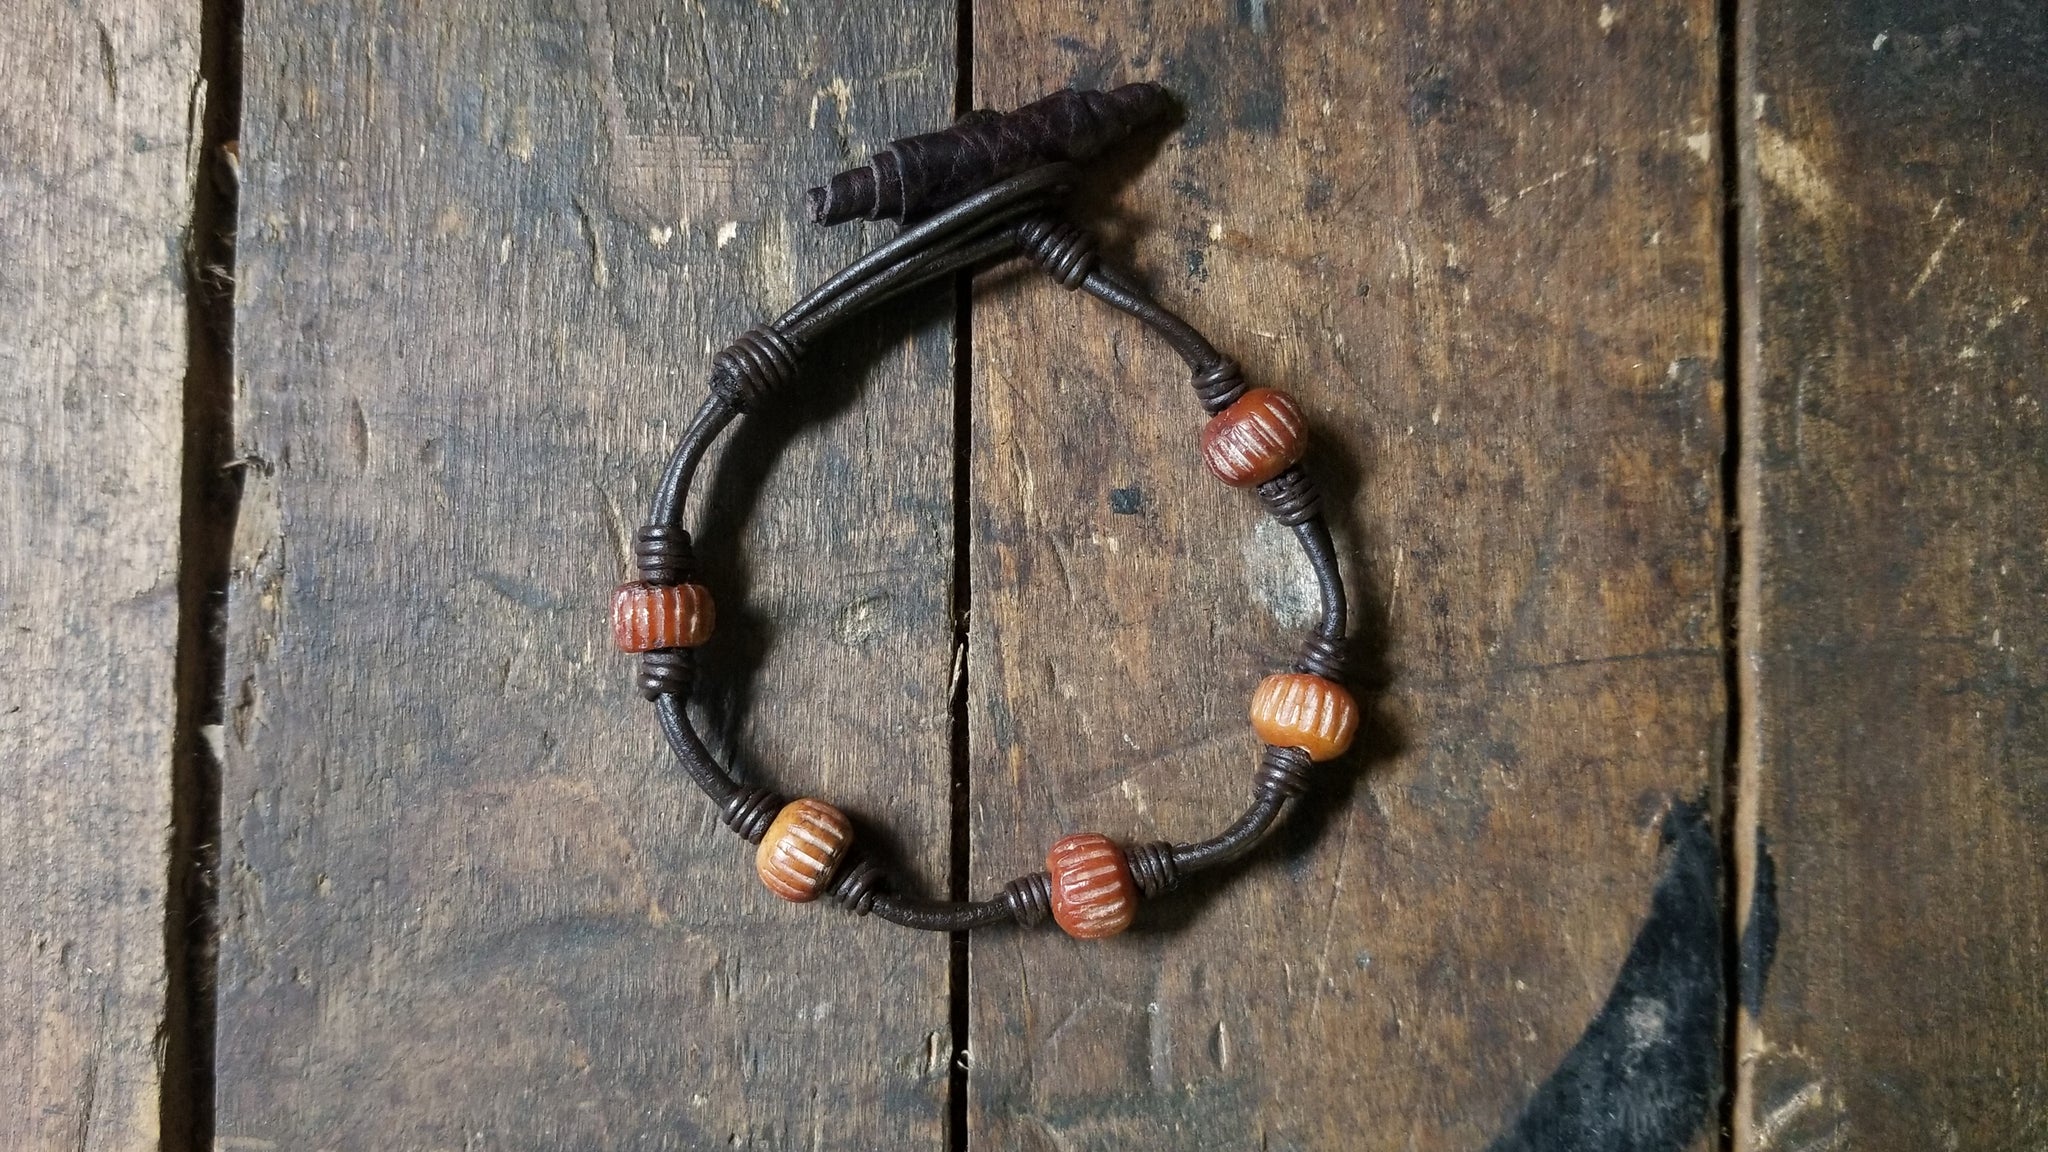 Chuma Leather Bracelet w/ Leather Toggle Button & Loop Clasp Closure, African Trade Bead Bracelet, Men's Women's Knot Bracelet, camel bone